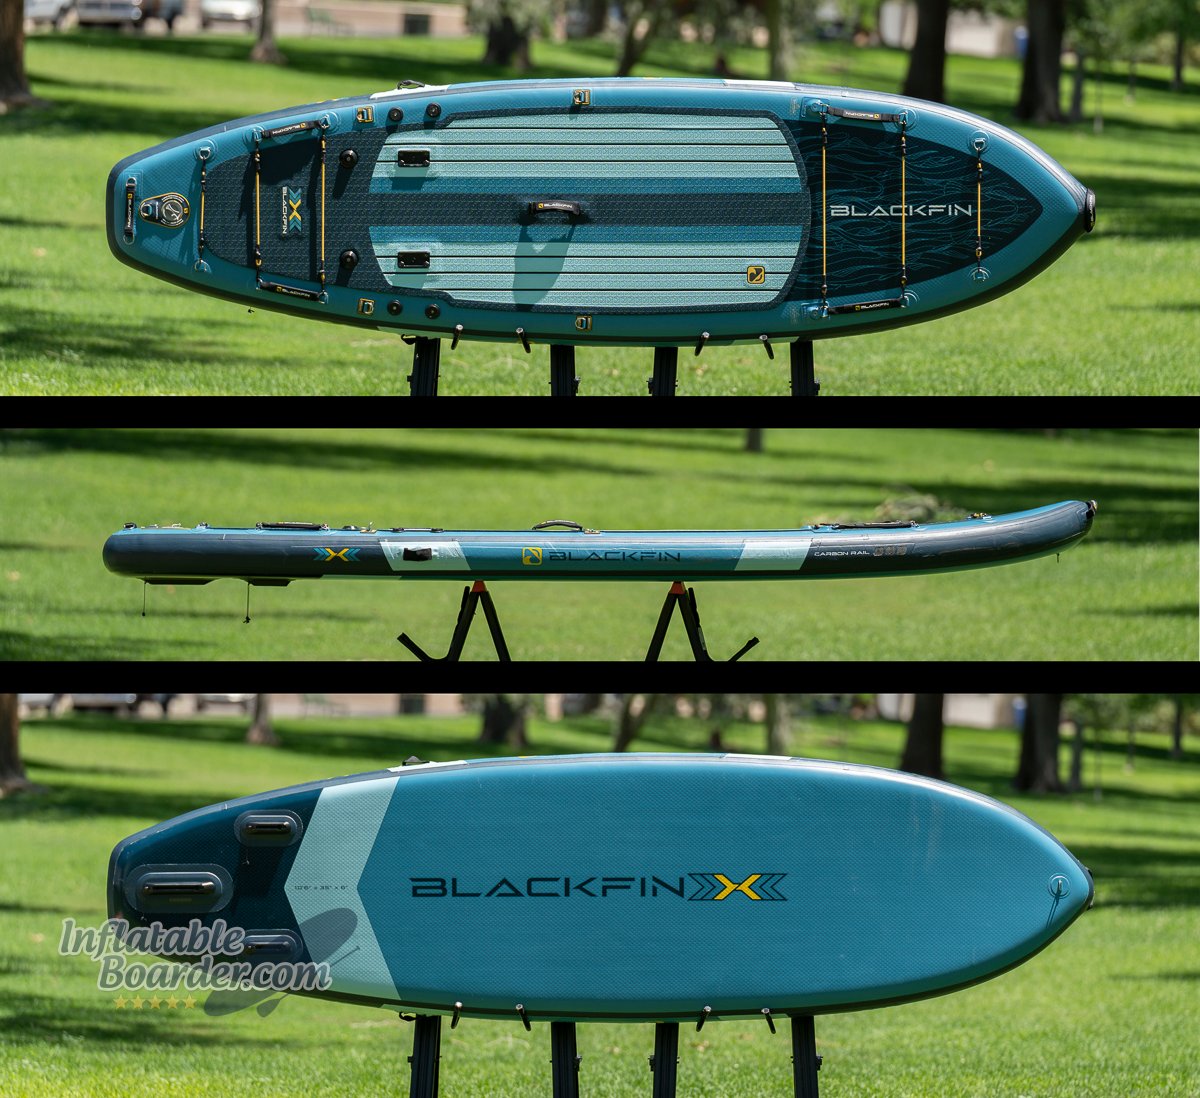 Blackfin Model X 6.0 iSUP shape and size